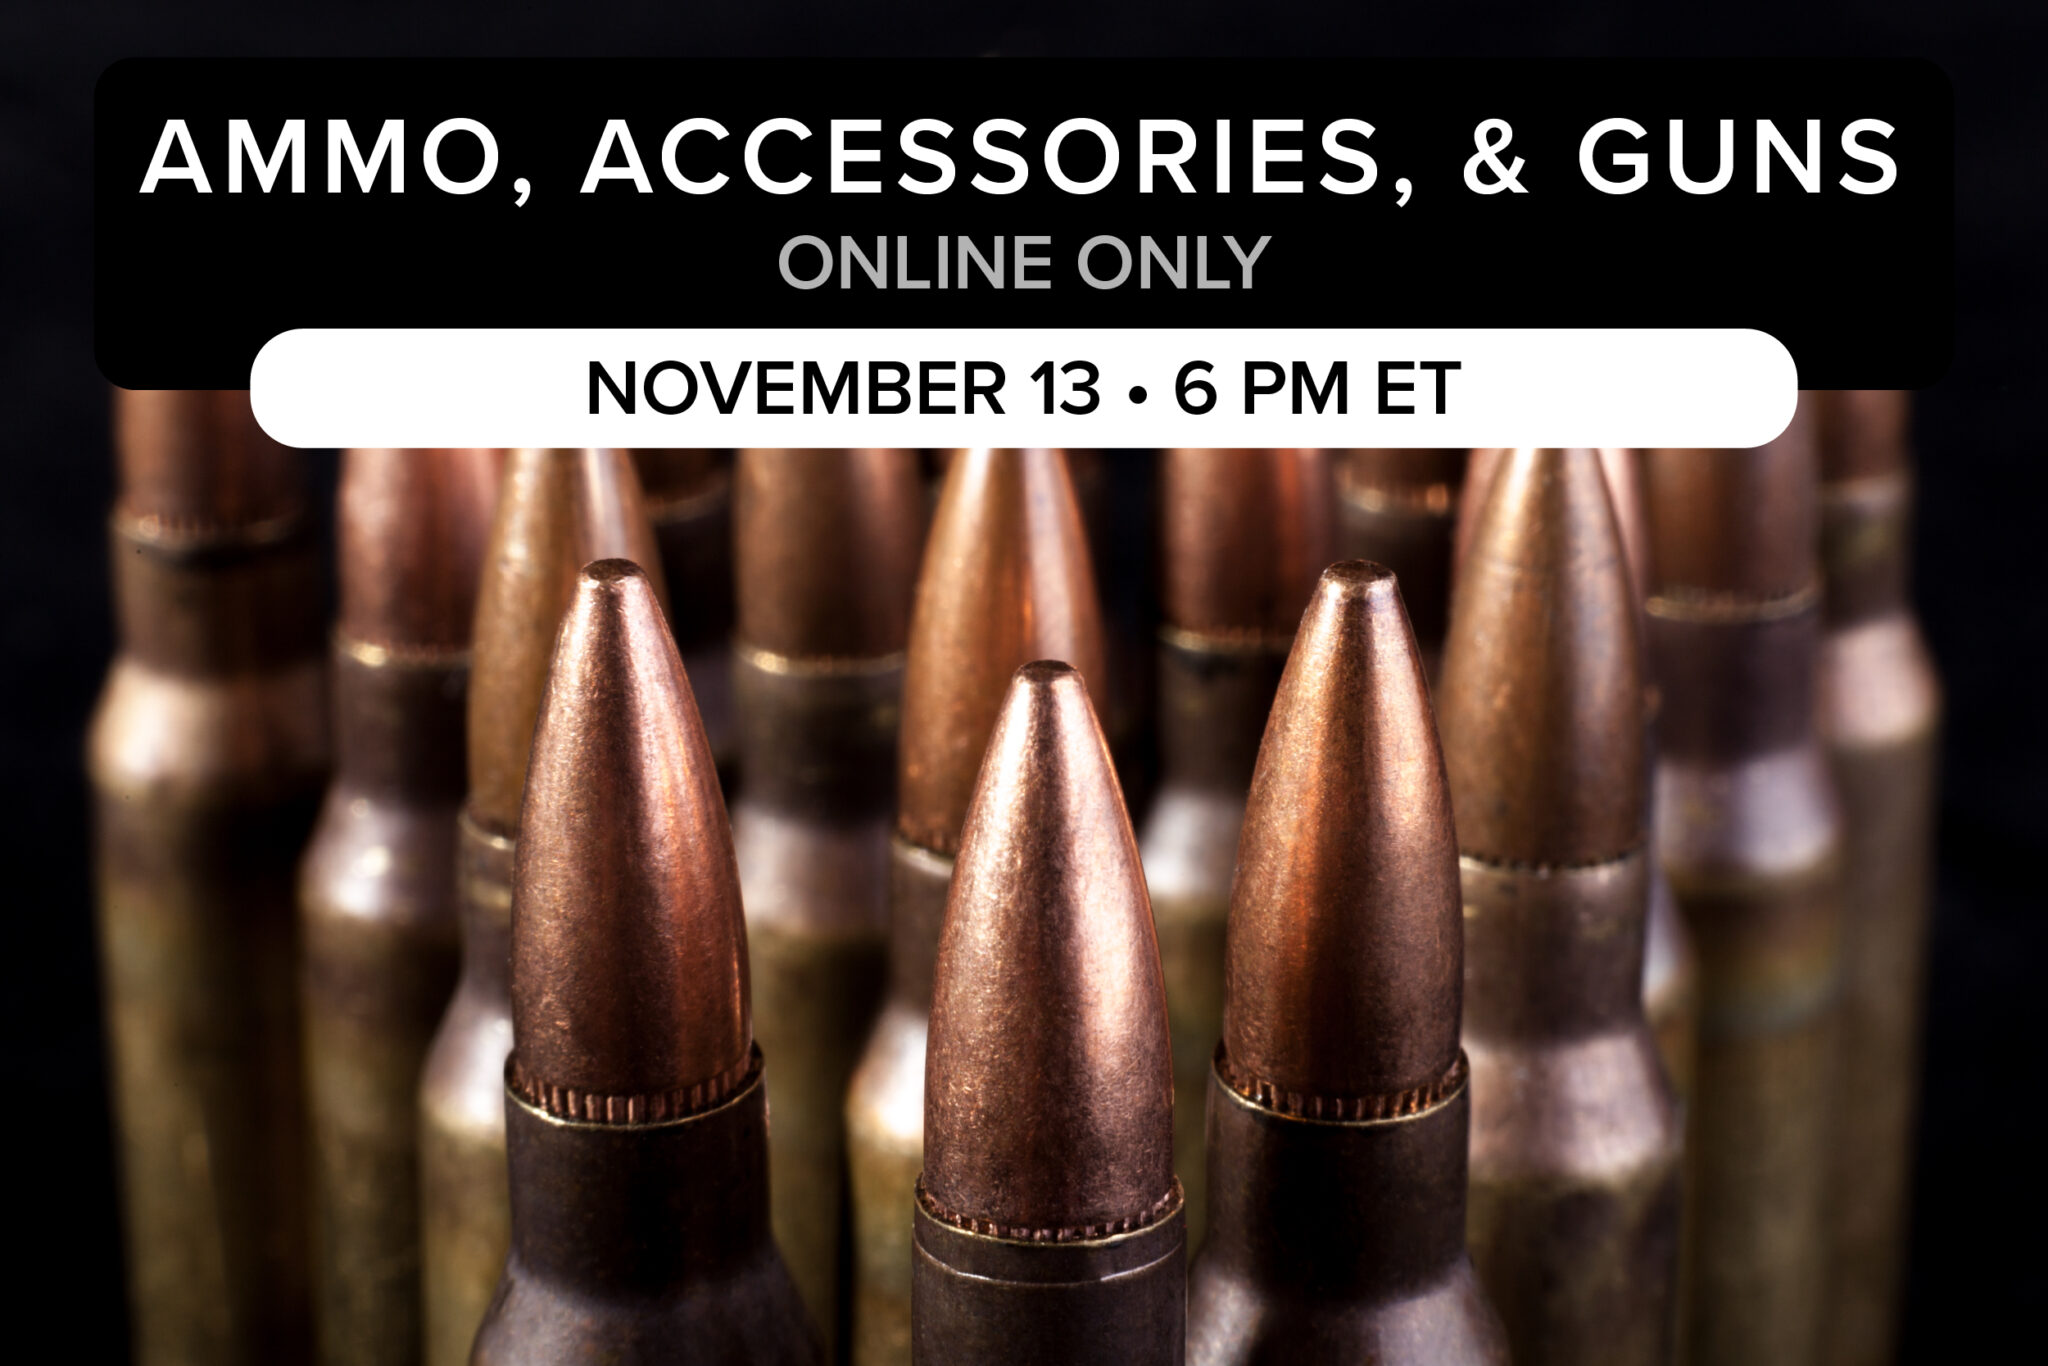 Ammo, Accessories, & Guns | November 13